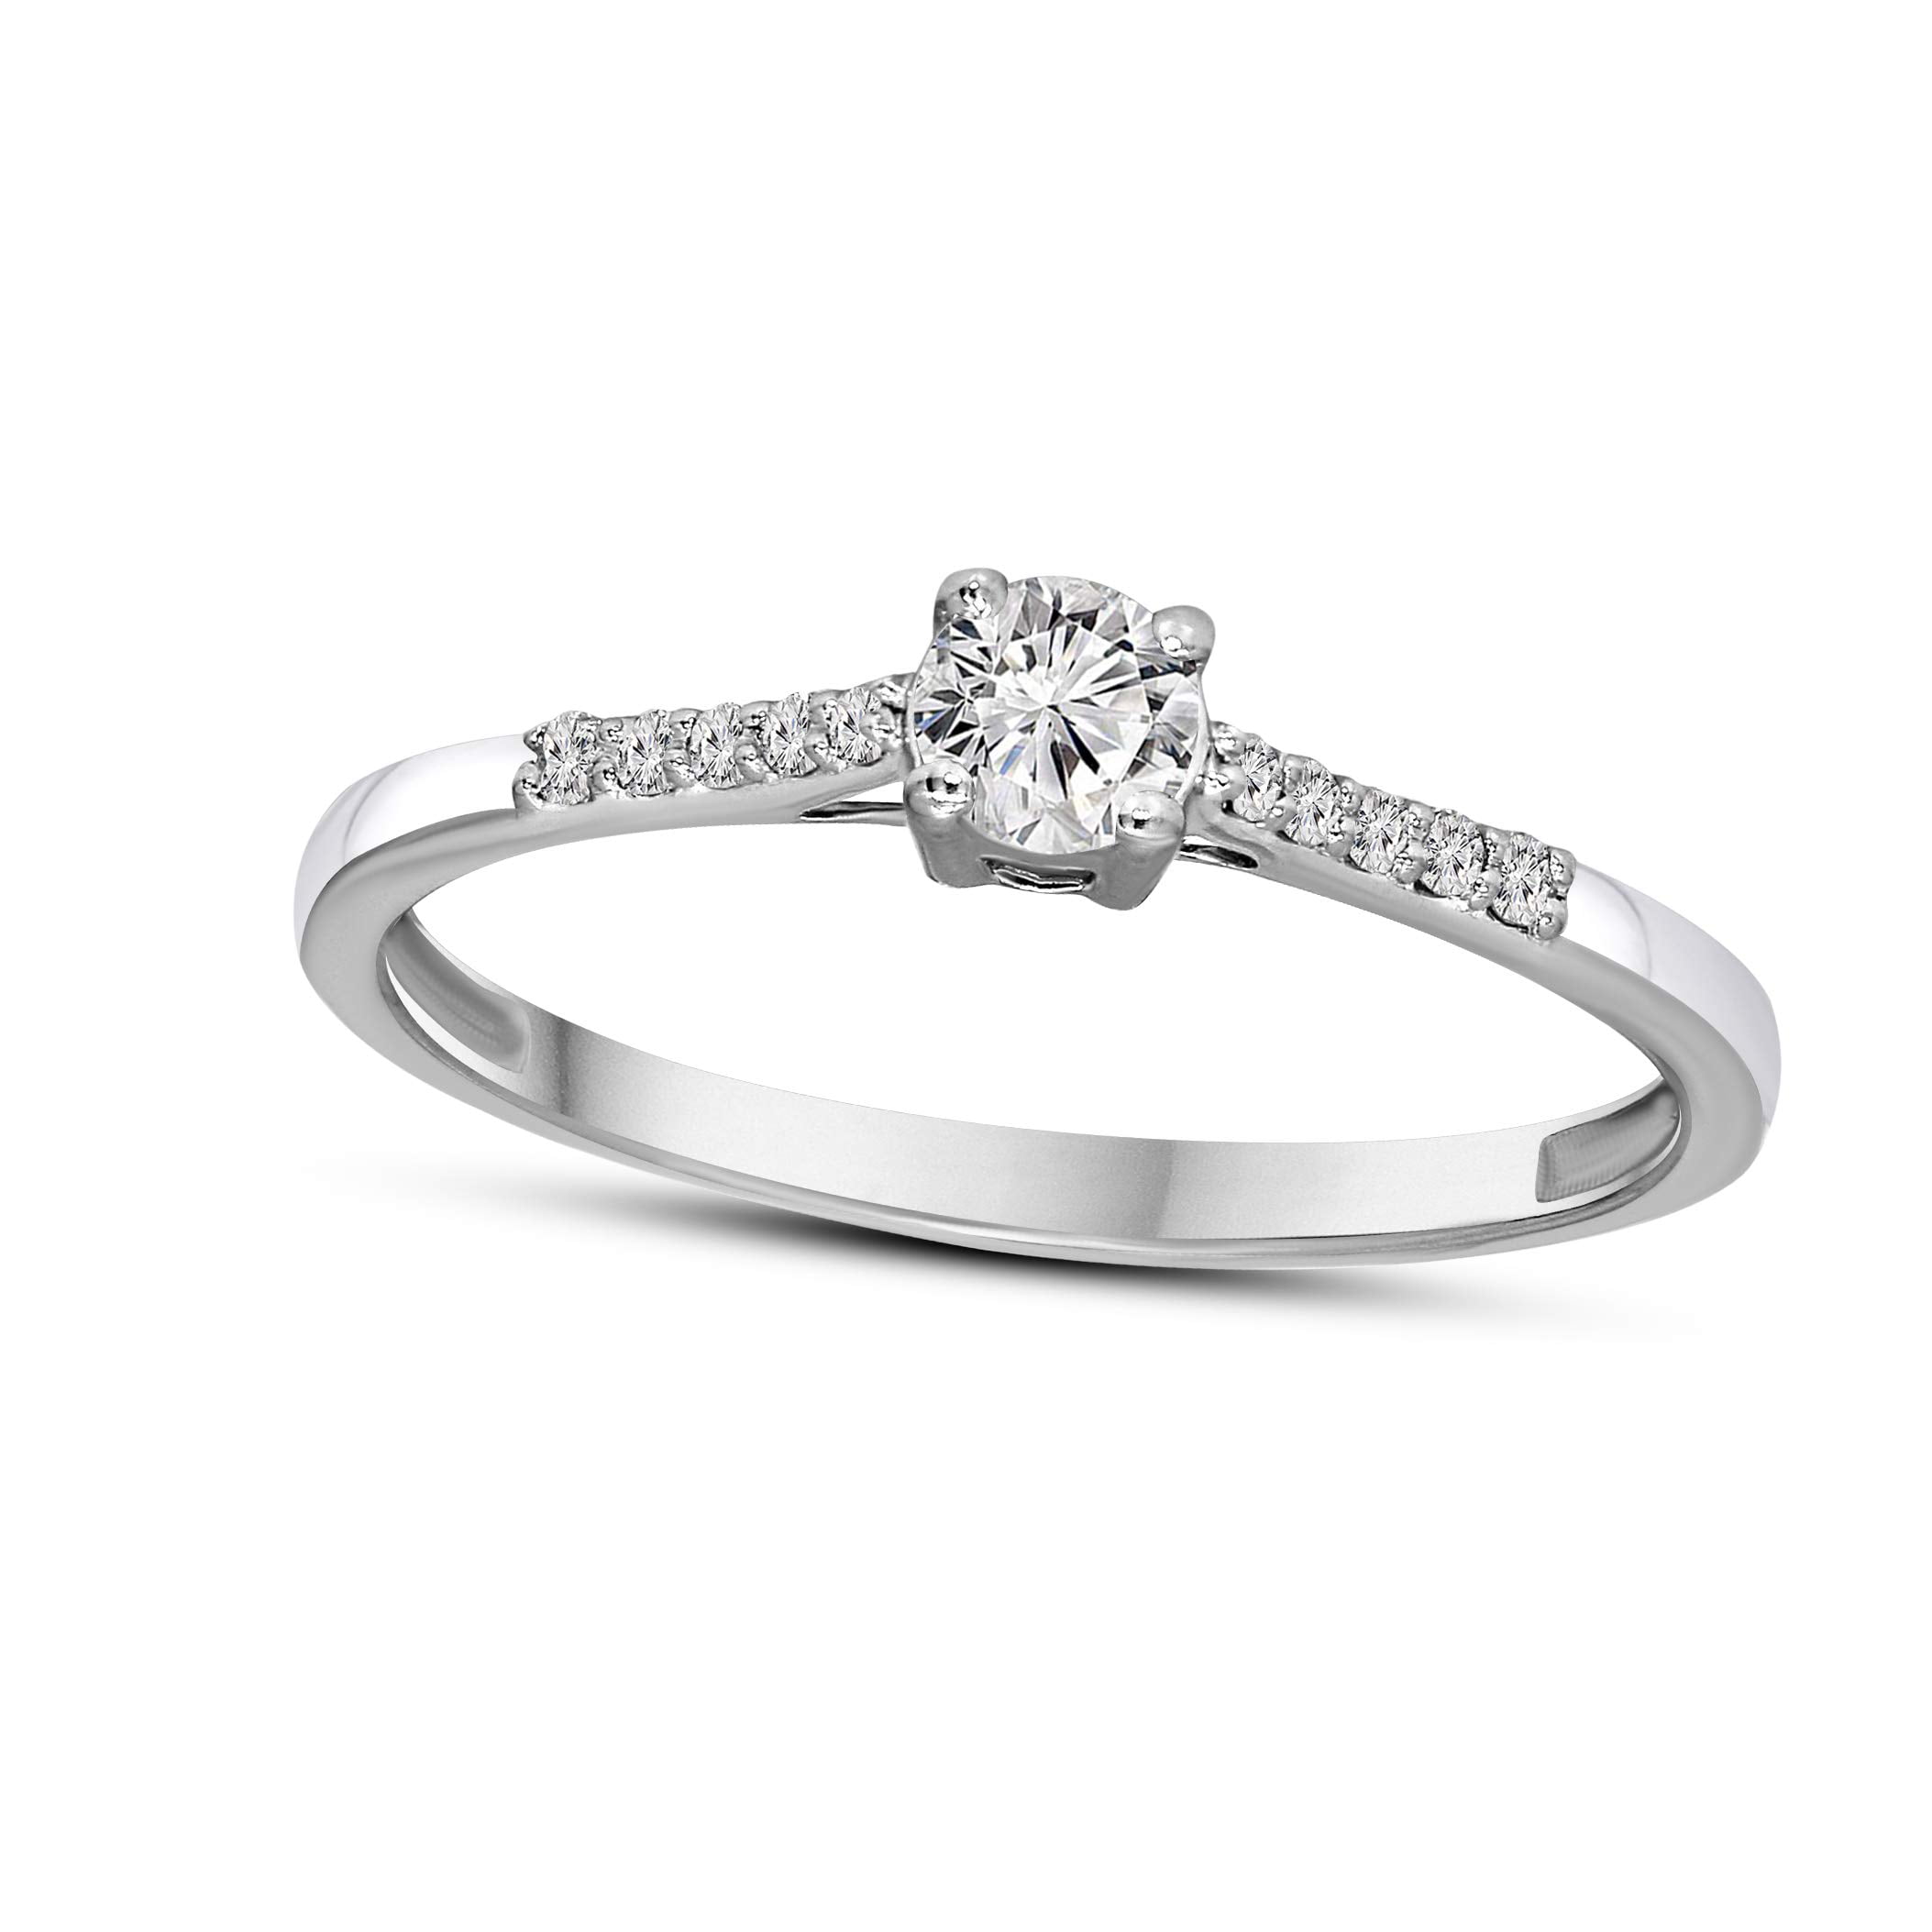 G-H, I1-I2 1/2Ct Infinity Pave Diamond Anniversary Ring in 10k White Gold-IGI